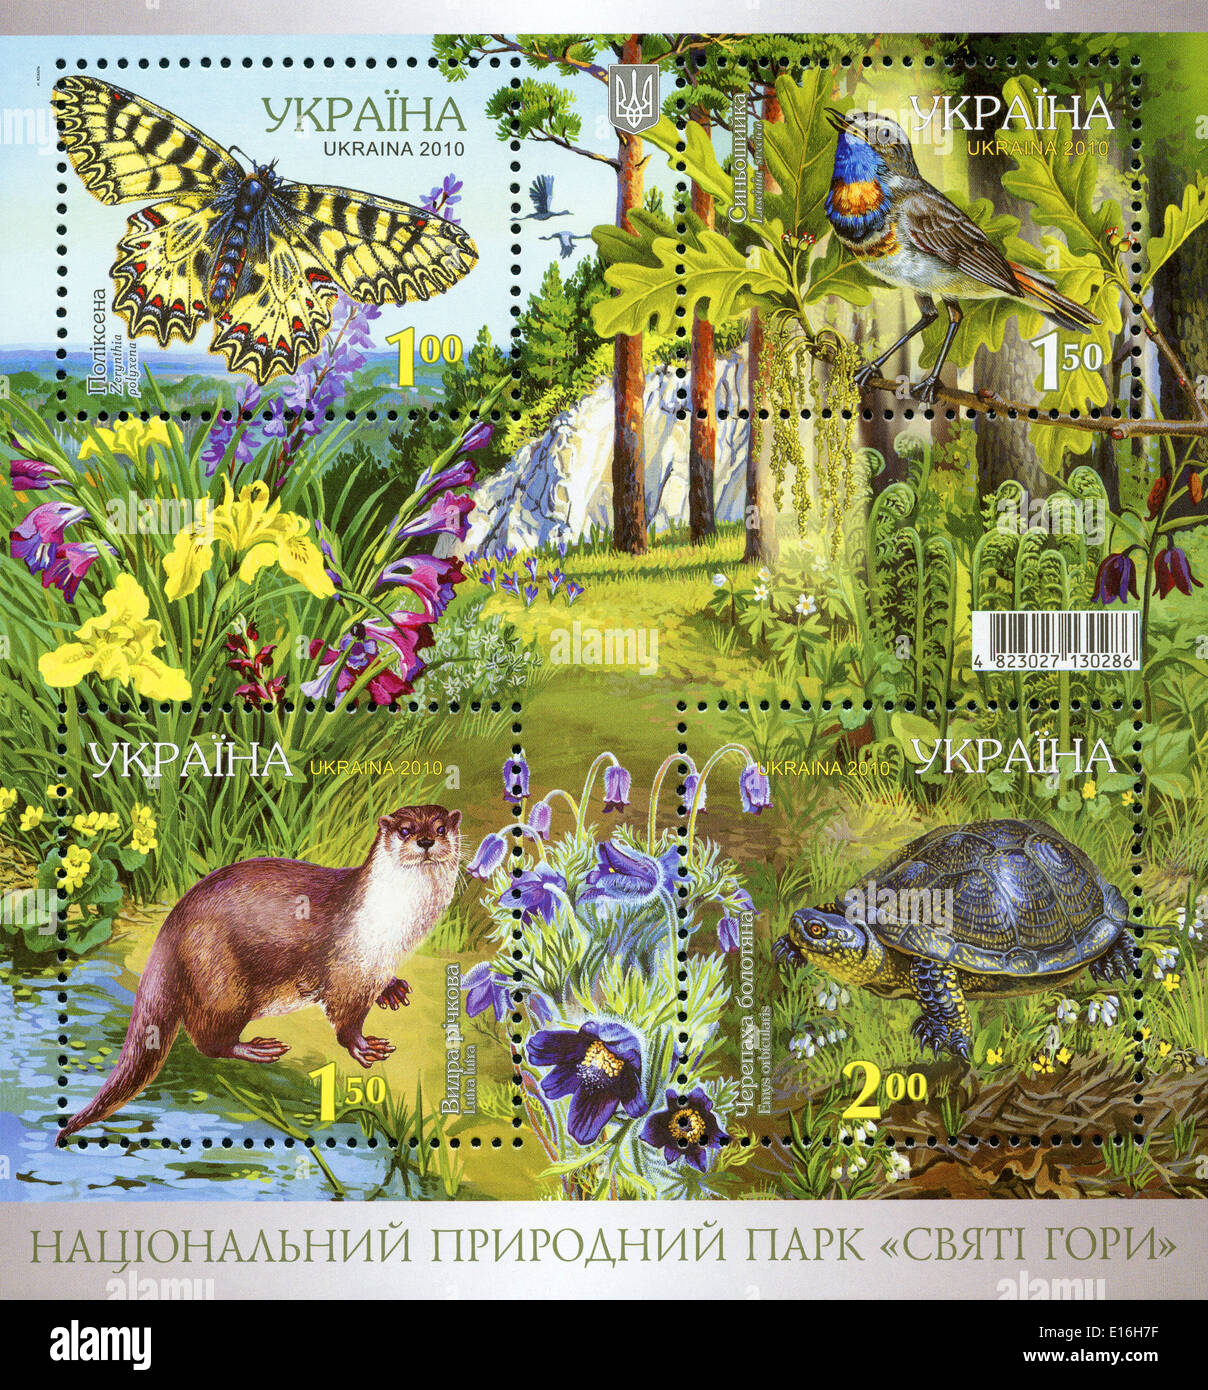 Ukrainian postage stamps depicting national park Sviati Gory in Ukraine Stock Photo